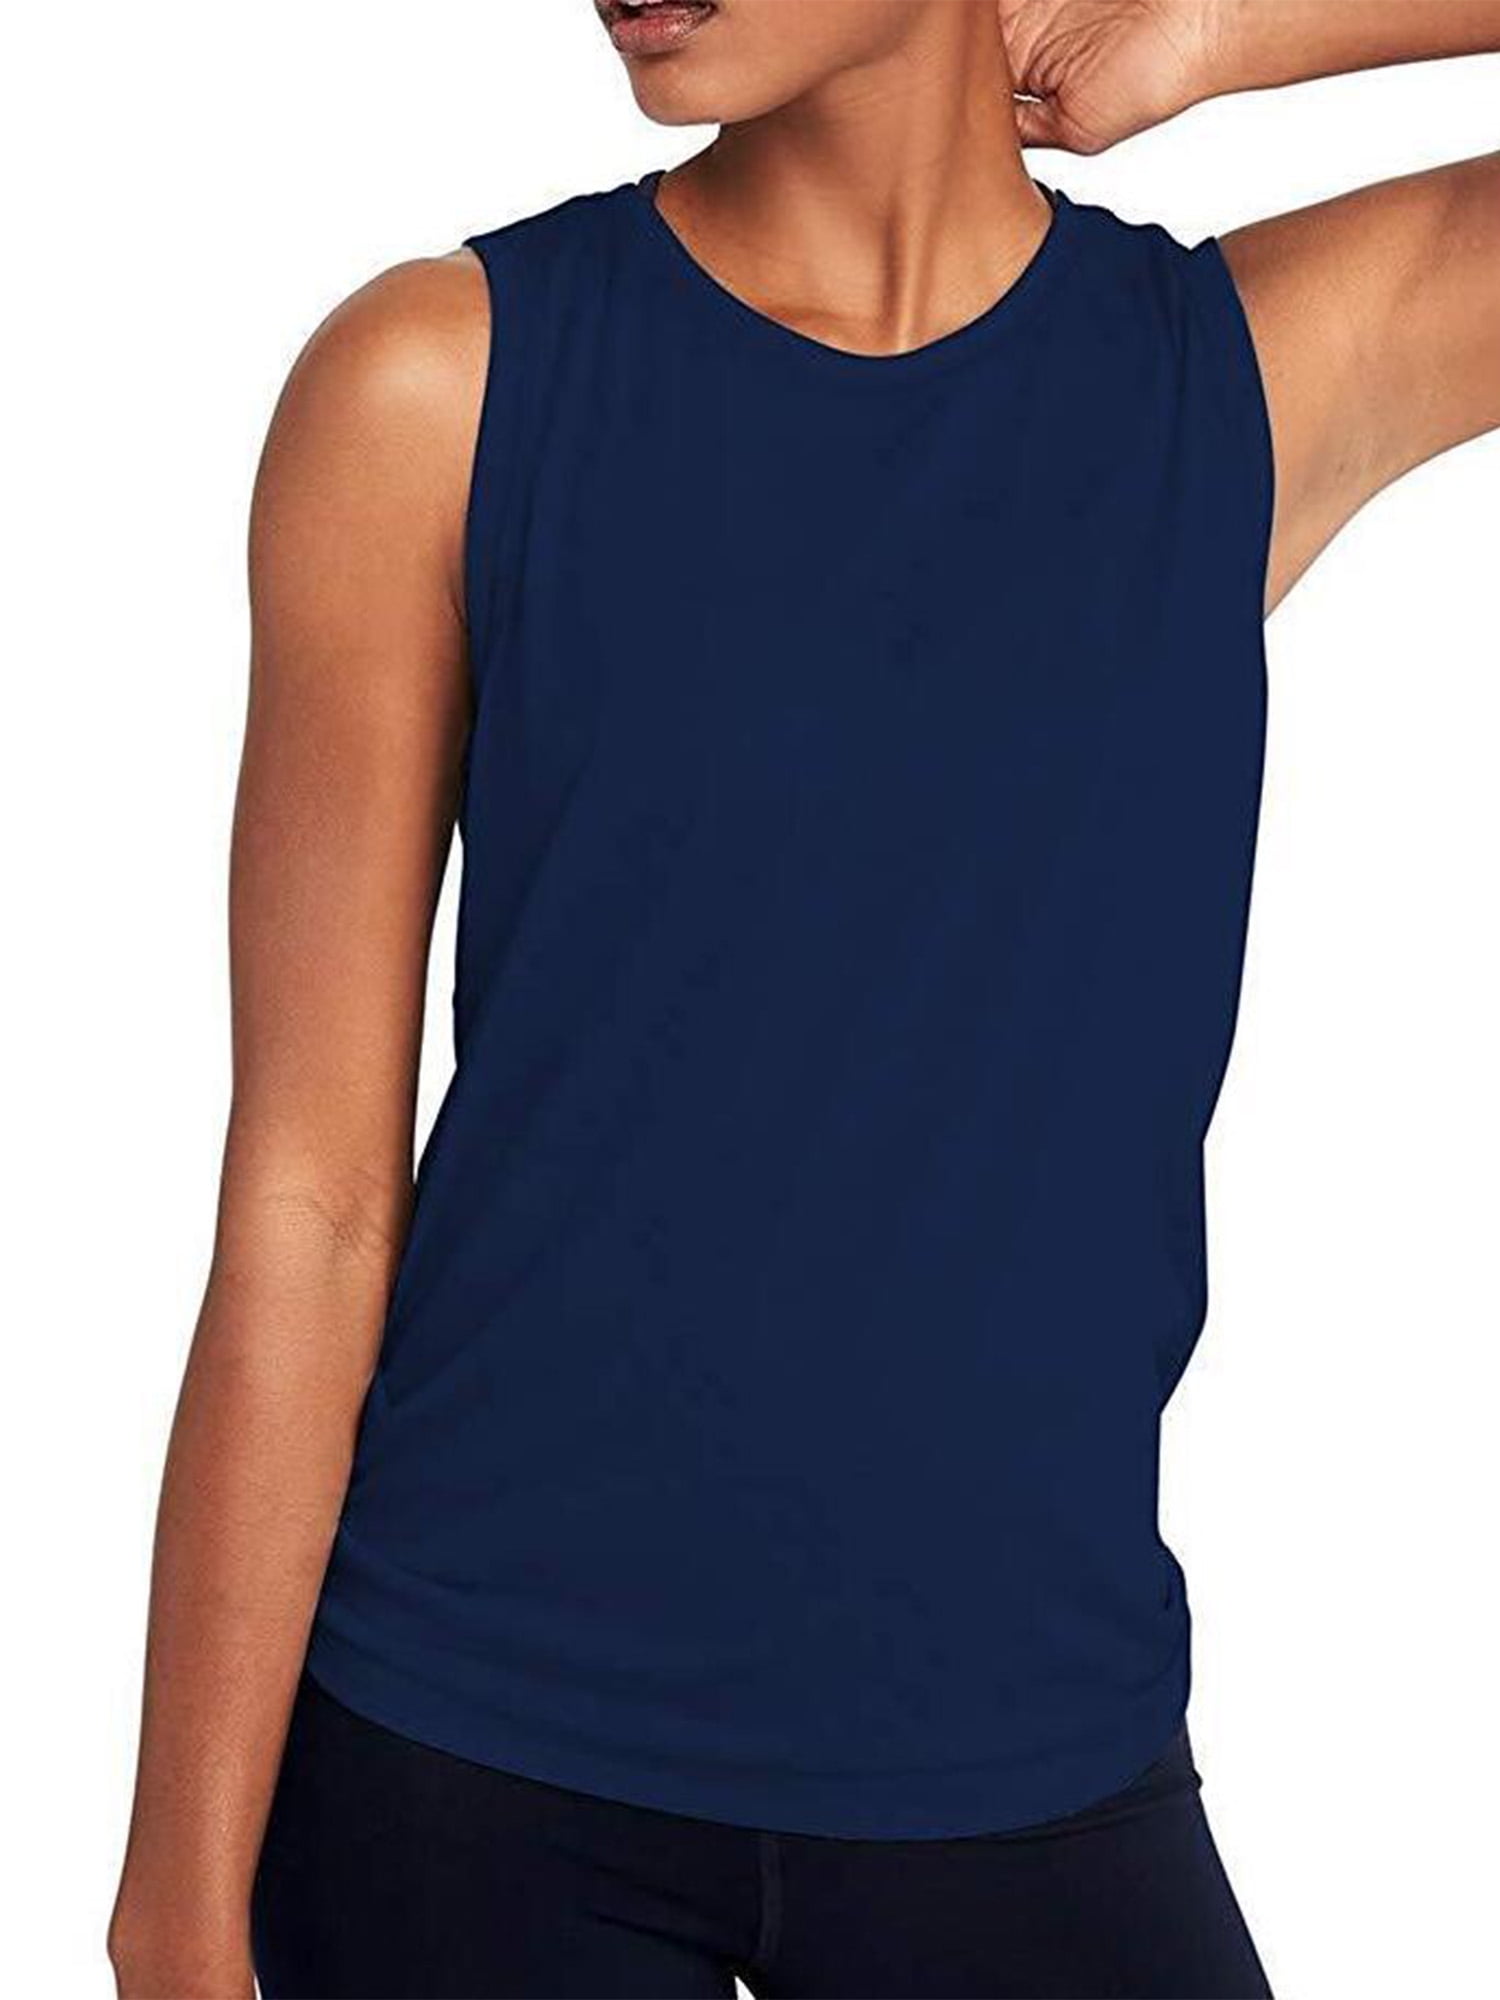 Women's Workout Tank Cotton Sleeveless Athletic Running Shirts Yoga Top - Walmart.com